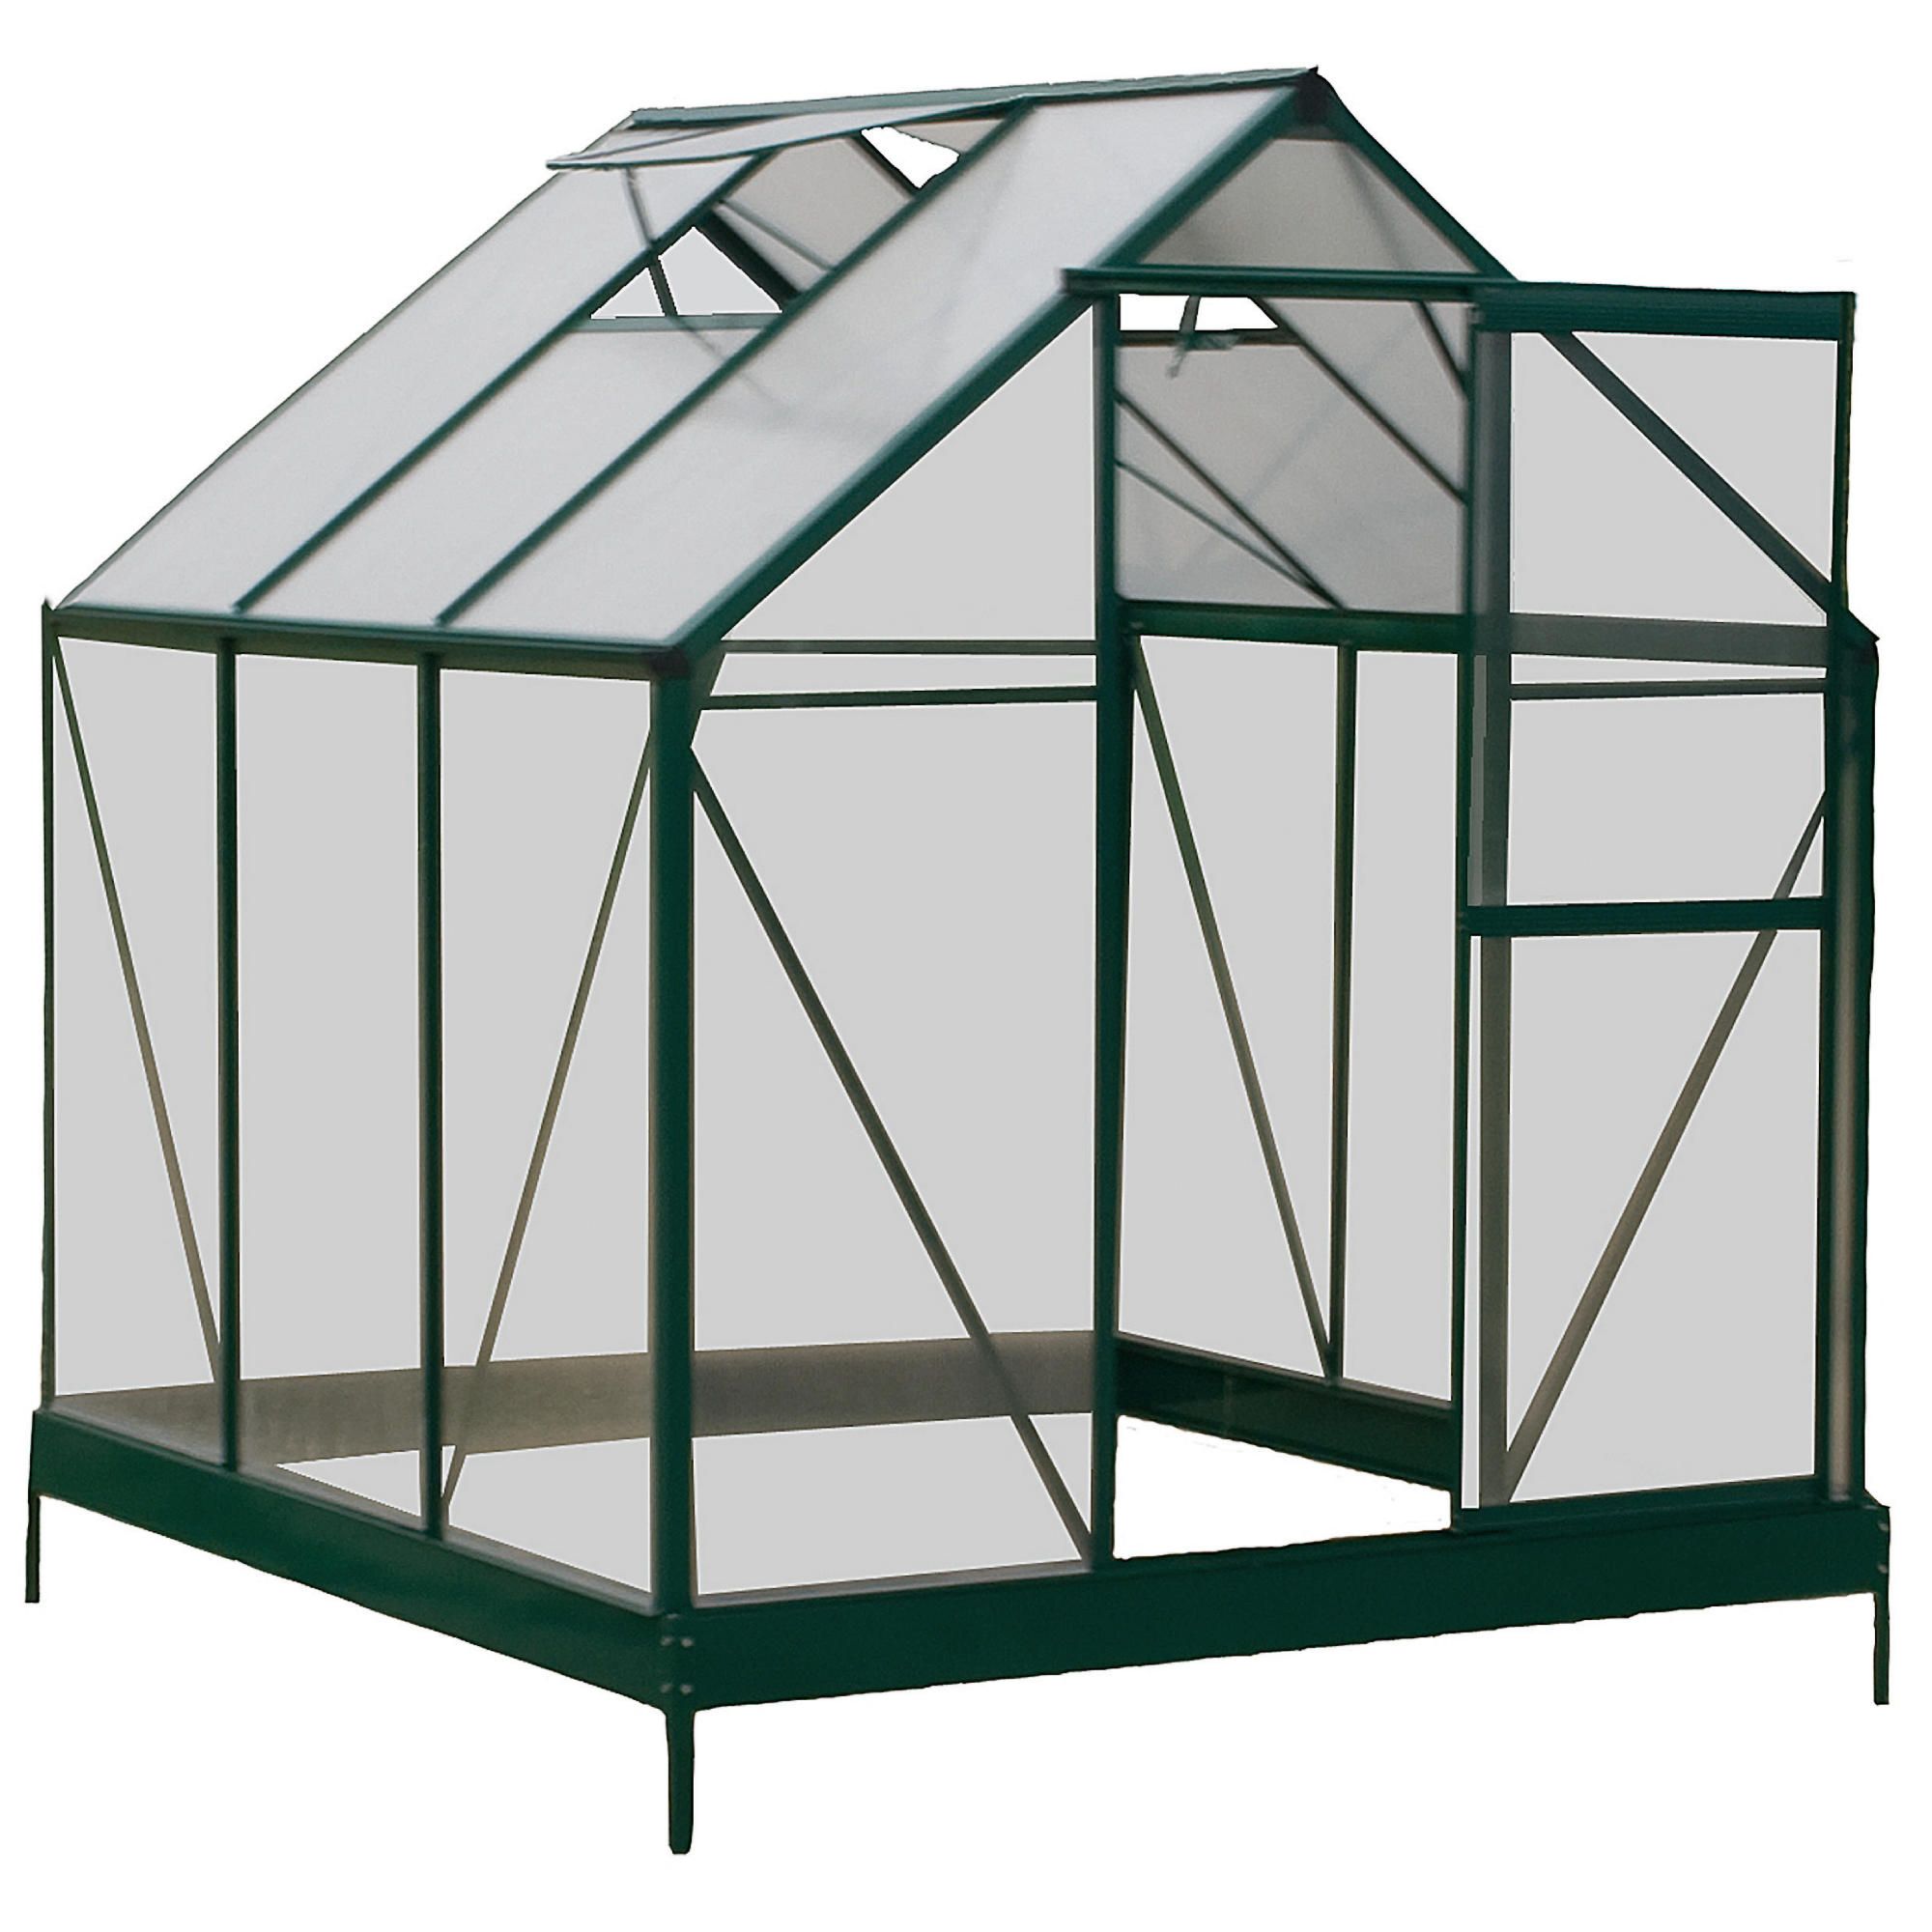 6 x 6 Aluminium & Polycarb Greenhouse at Tesco Direct